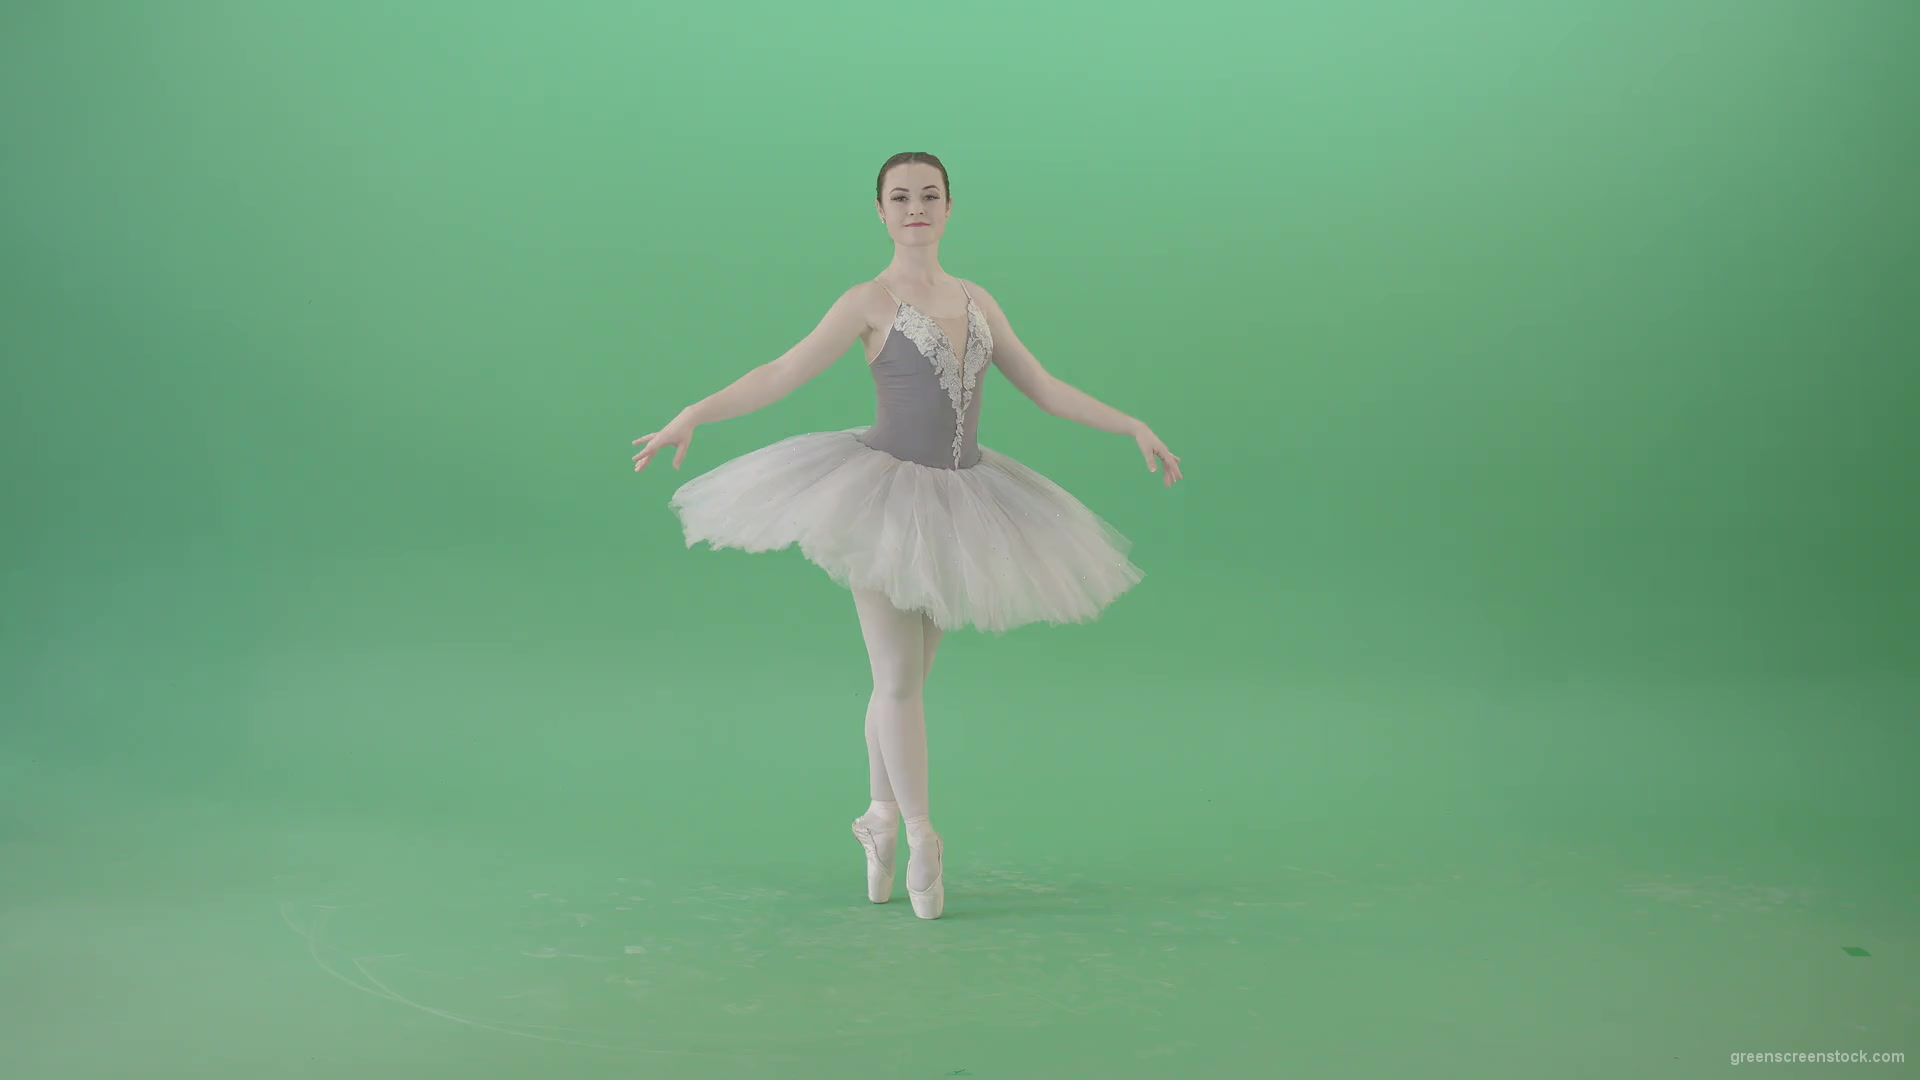 Ballerina-waving-hands-and-dance-on-green-screen-4K-Video-Footage-1920_001 Green Screen Stock